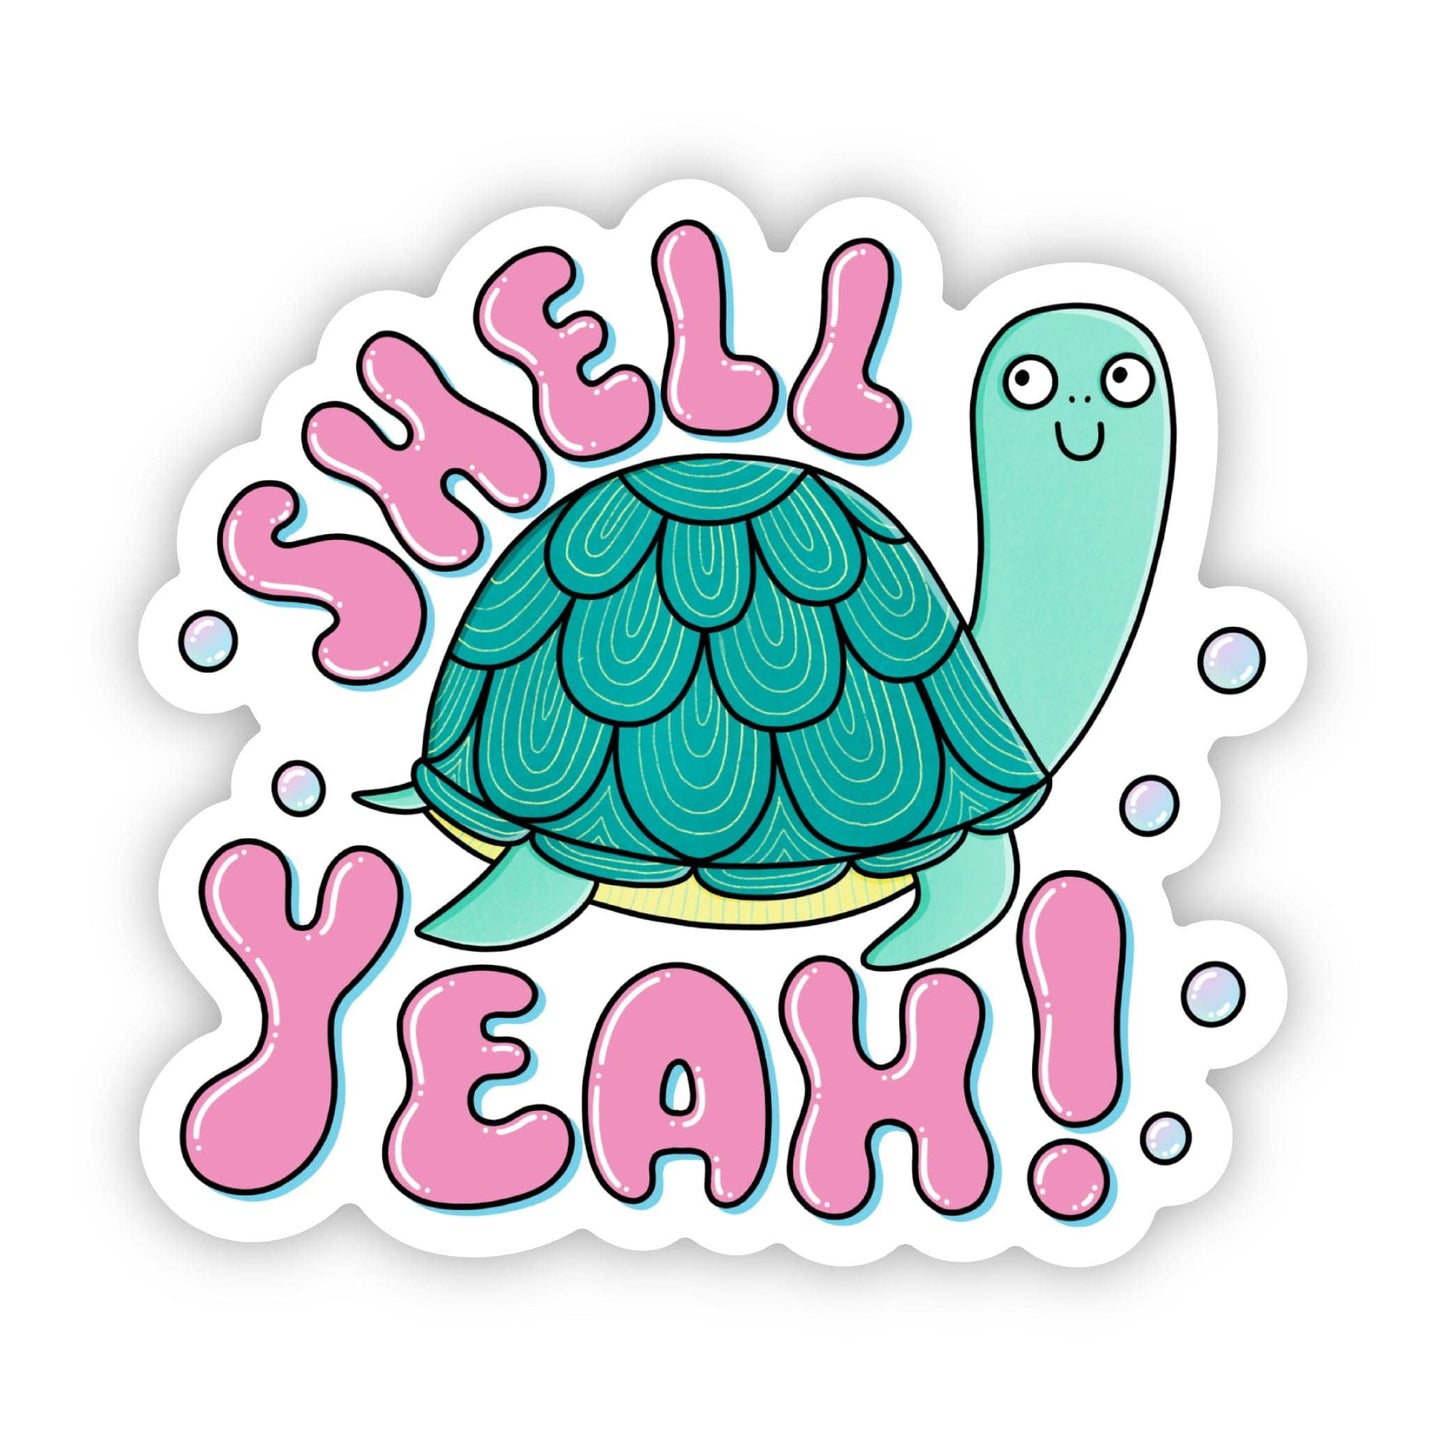 Big Moods - "Shell yeah" turtle sticker